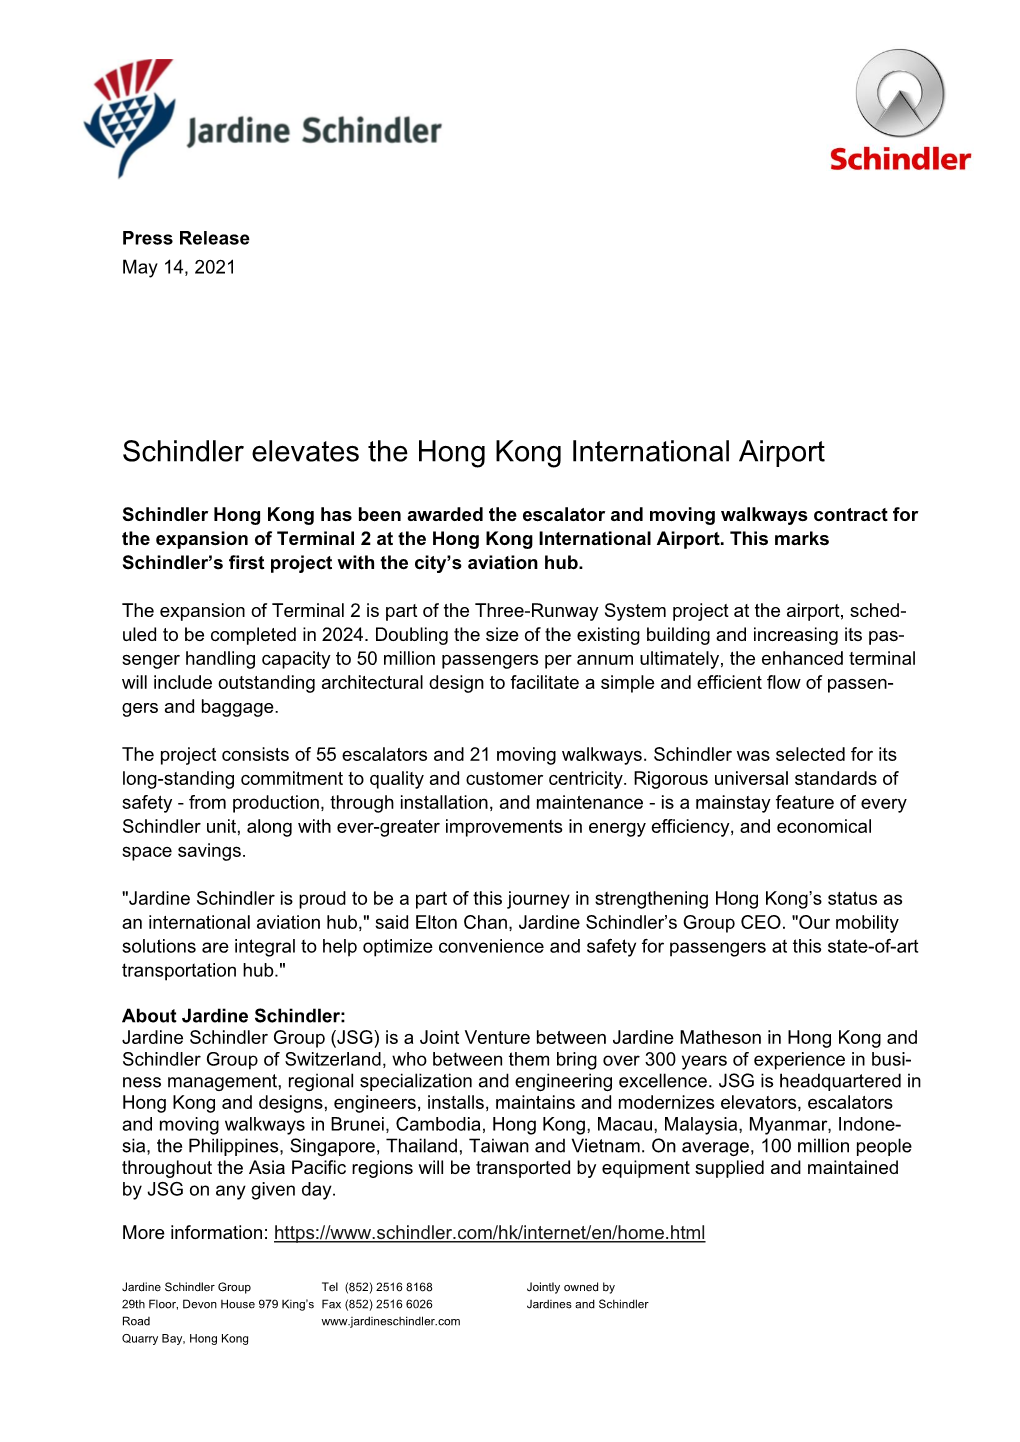 Schindler Elevates the Hong Kong International Airport